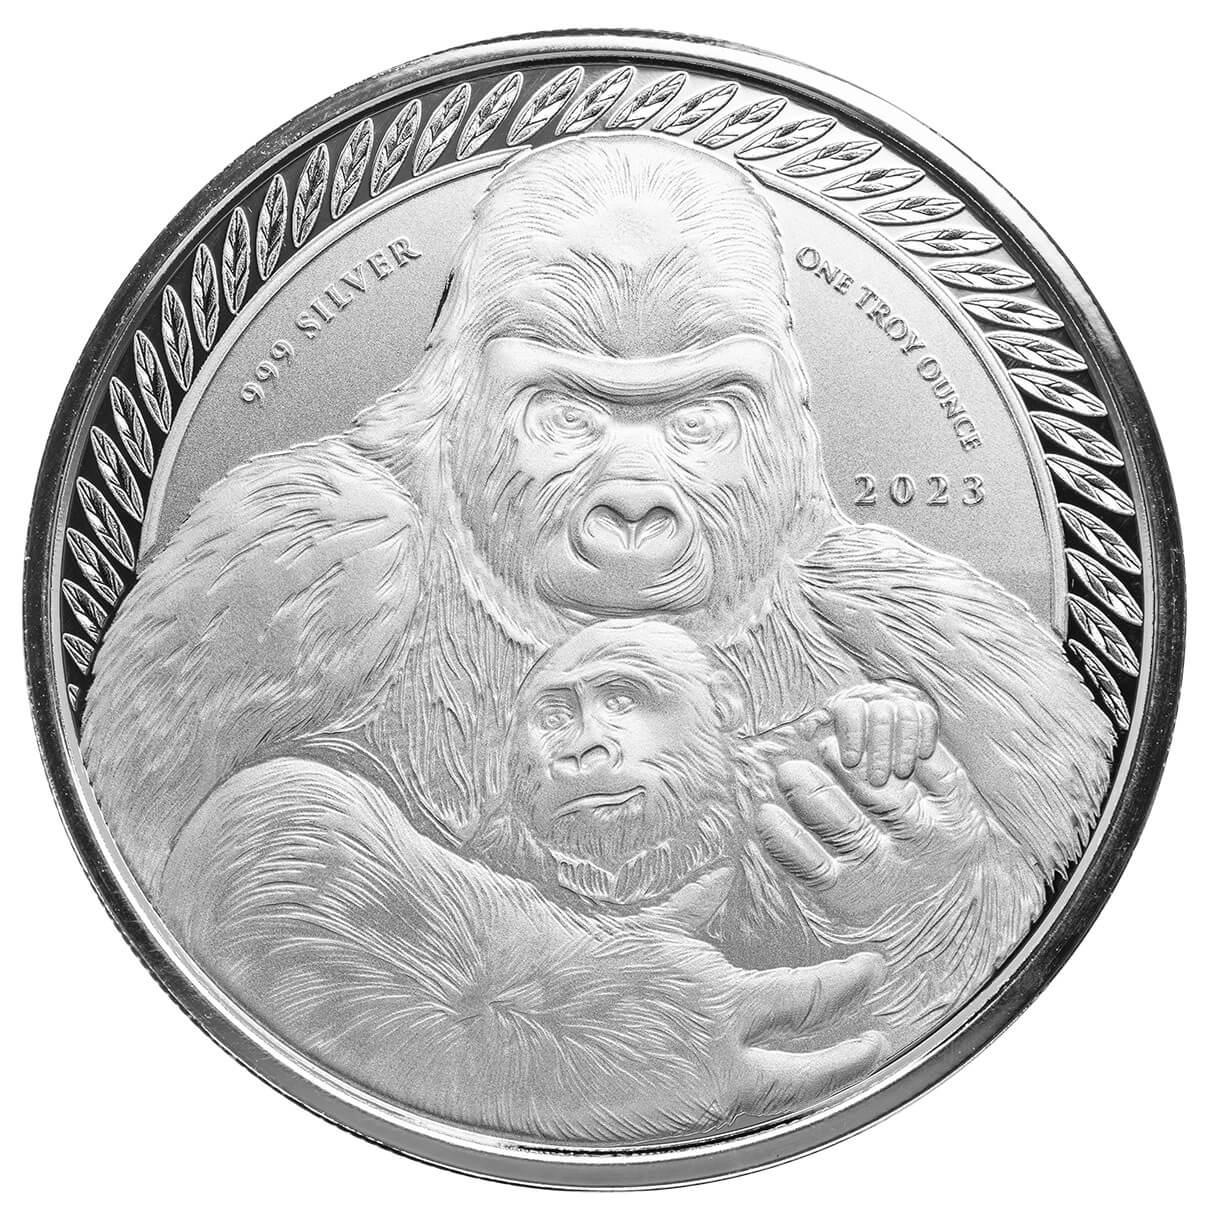 2023 Congo Silverback Gorilla 1 oz Silver Proof Like Coin